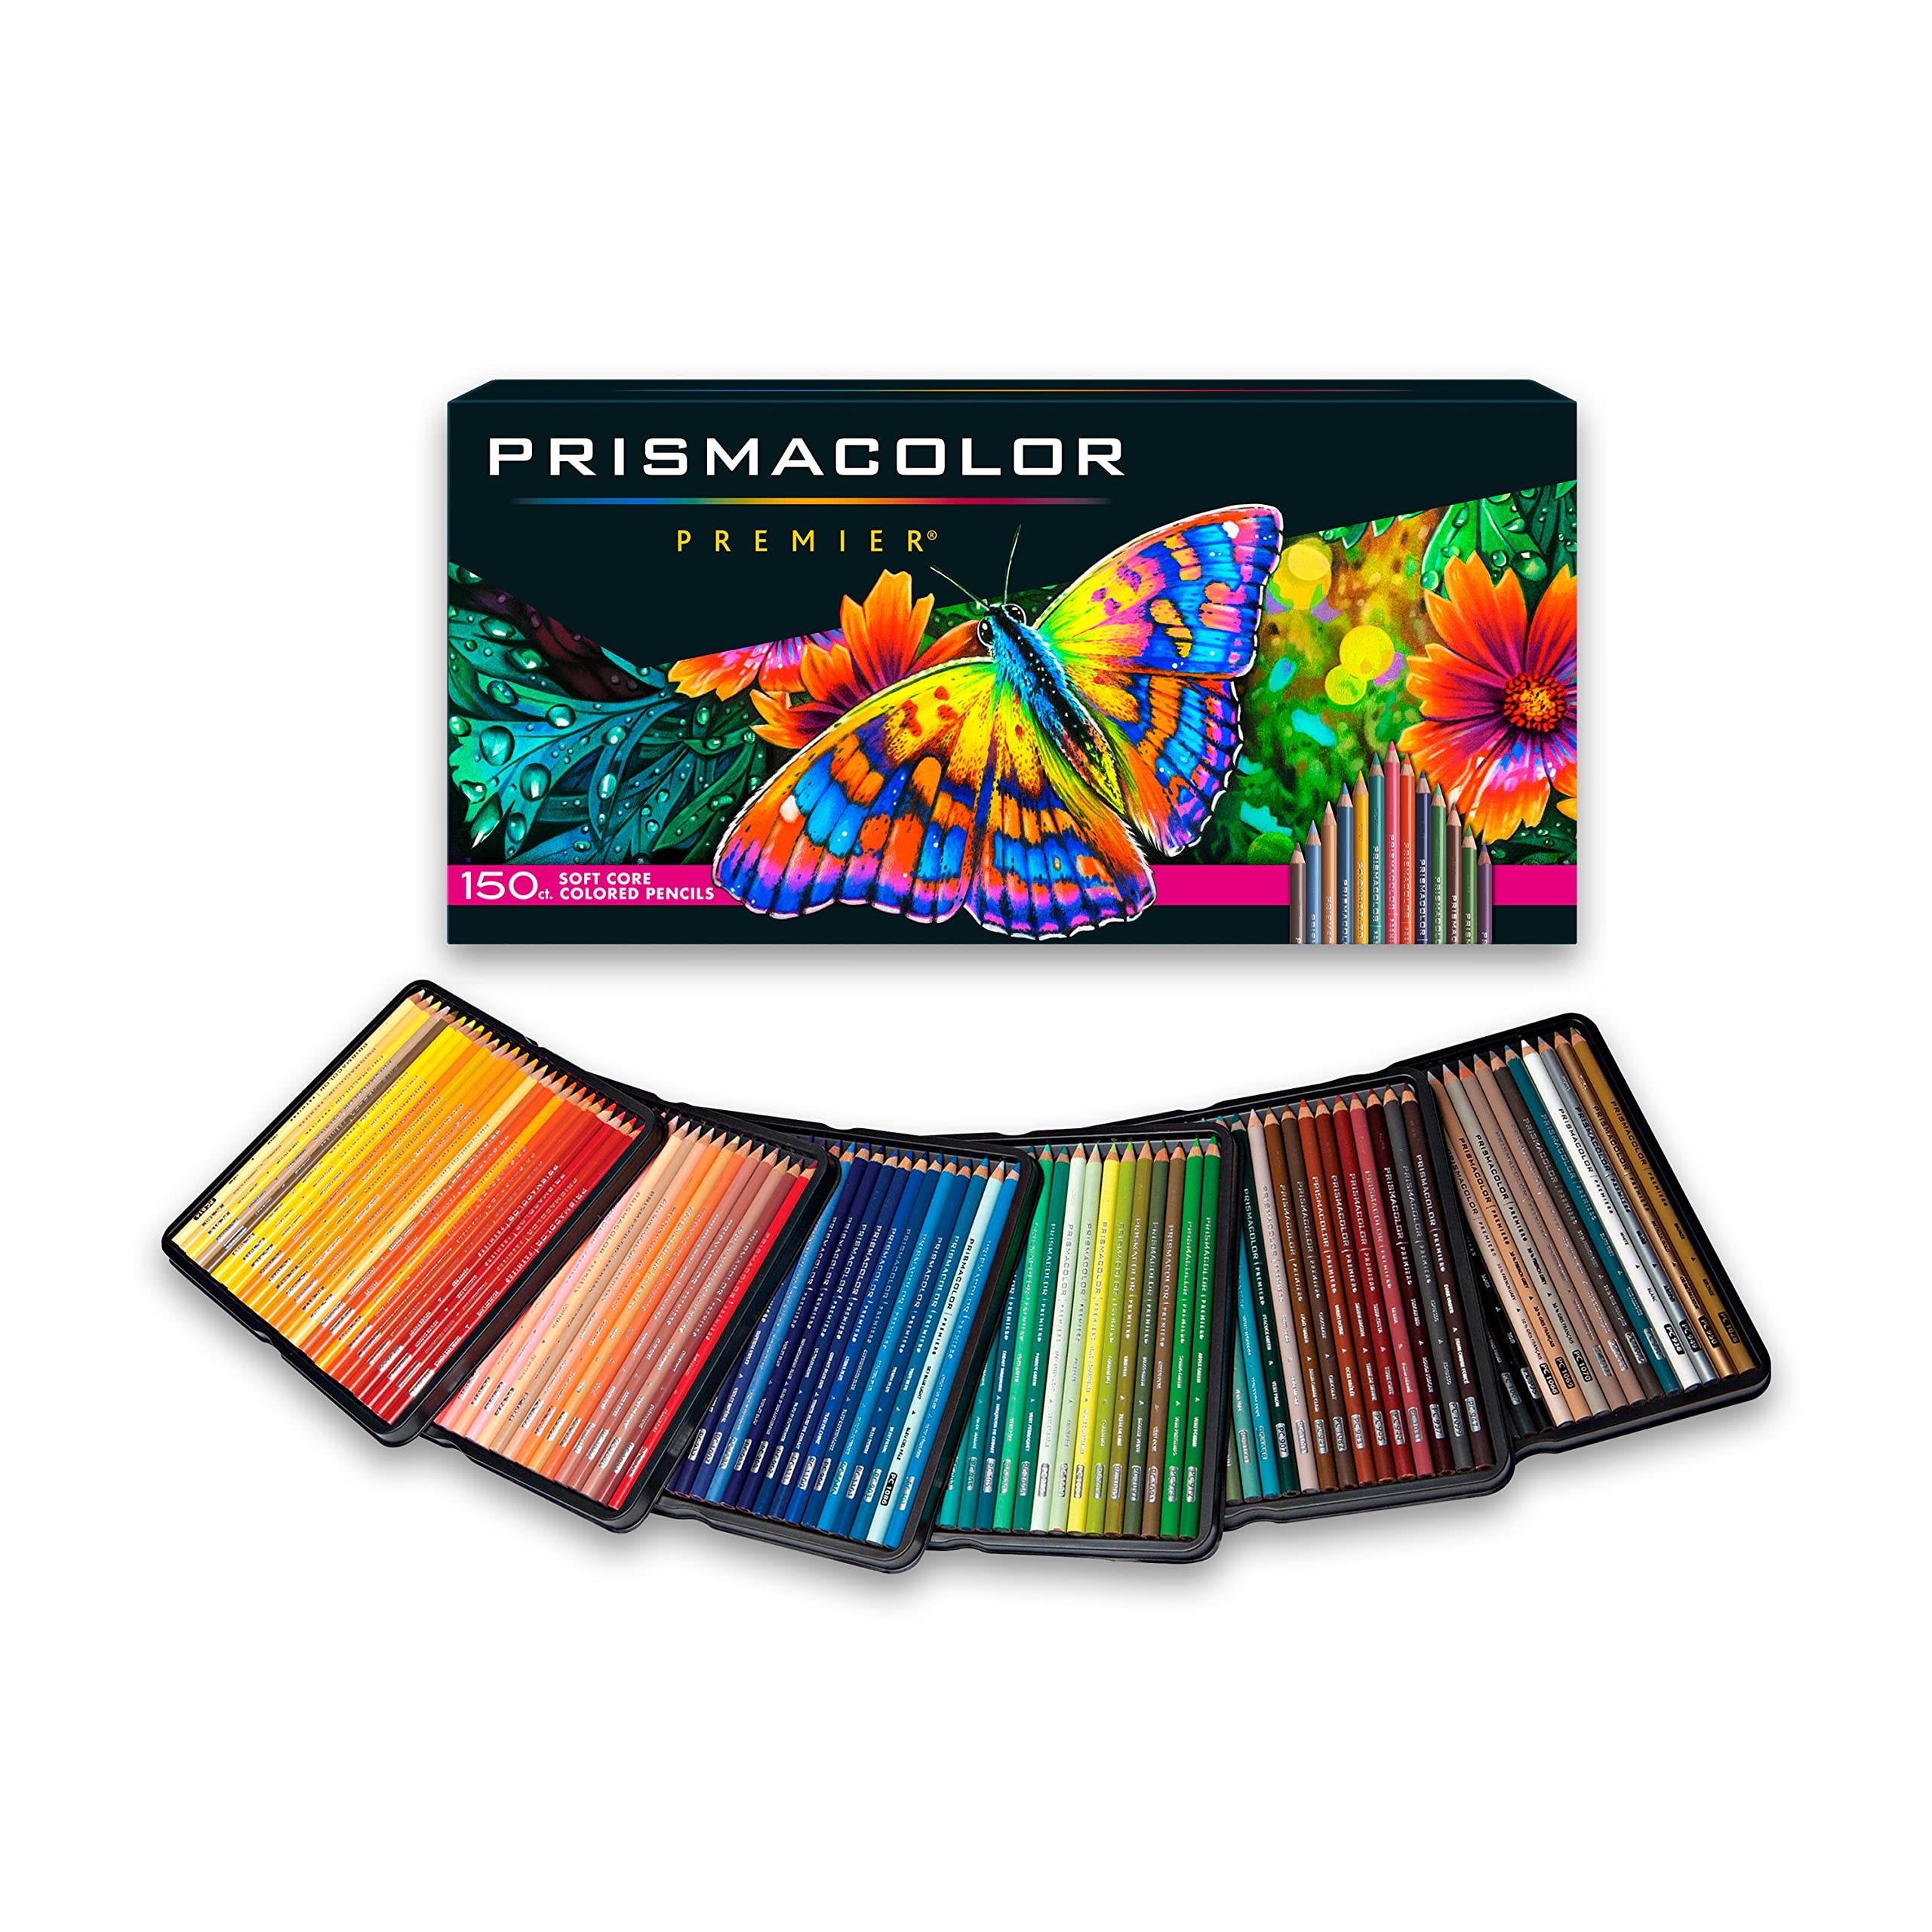 Prismacolor プレミア色鉛筆 |デッサン、スケッチ、大人の塗り絵用画材 |ソフトコア色鉛筆 150本パック